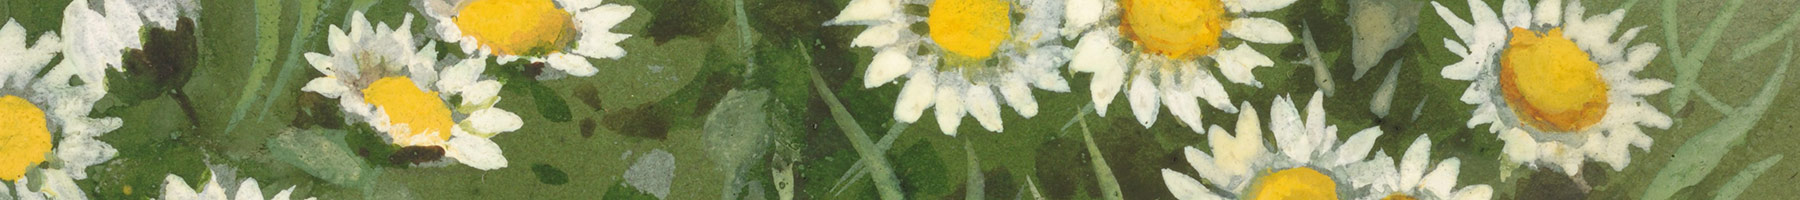 illustration of daisies